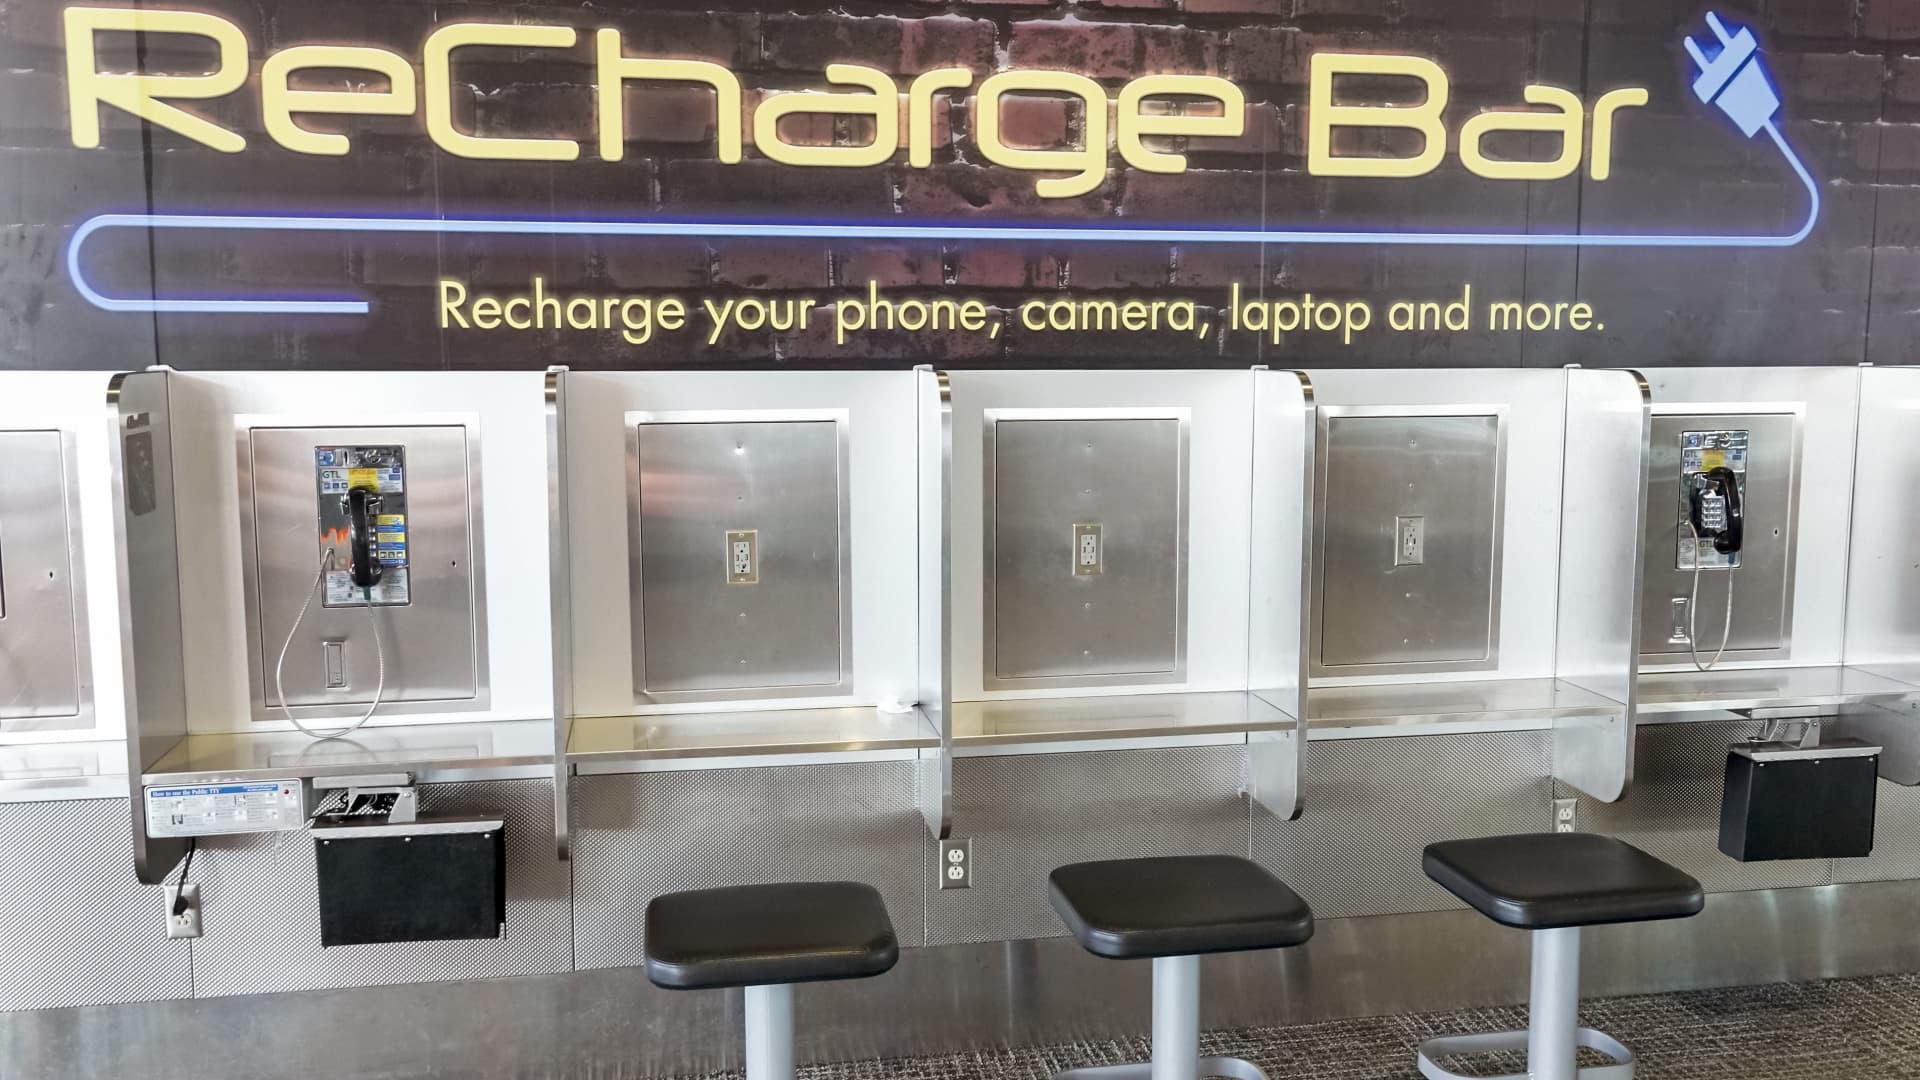 FBI warns against using public phone charging stations